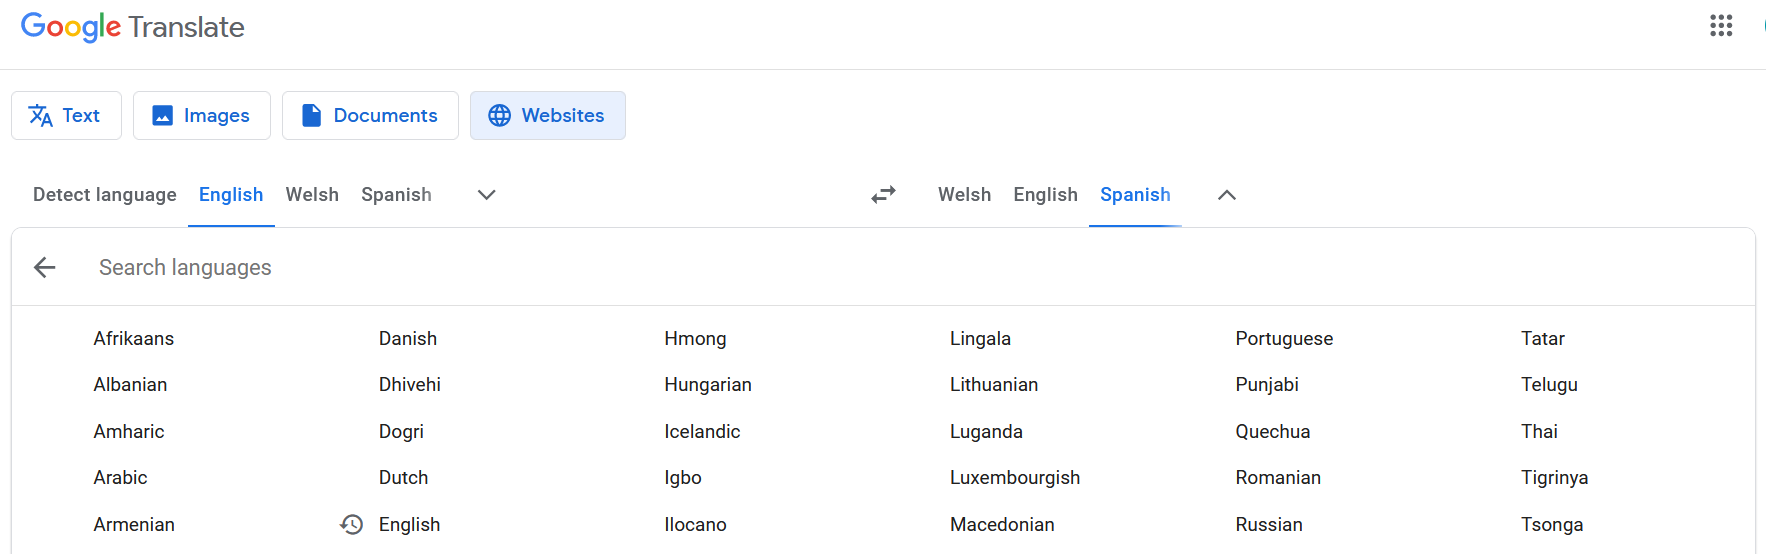 Google translation language option screen